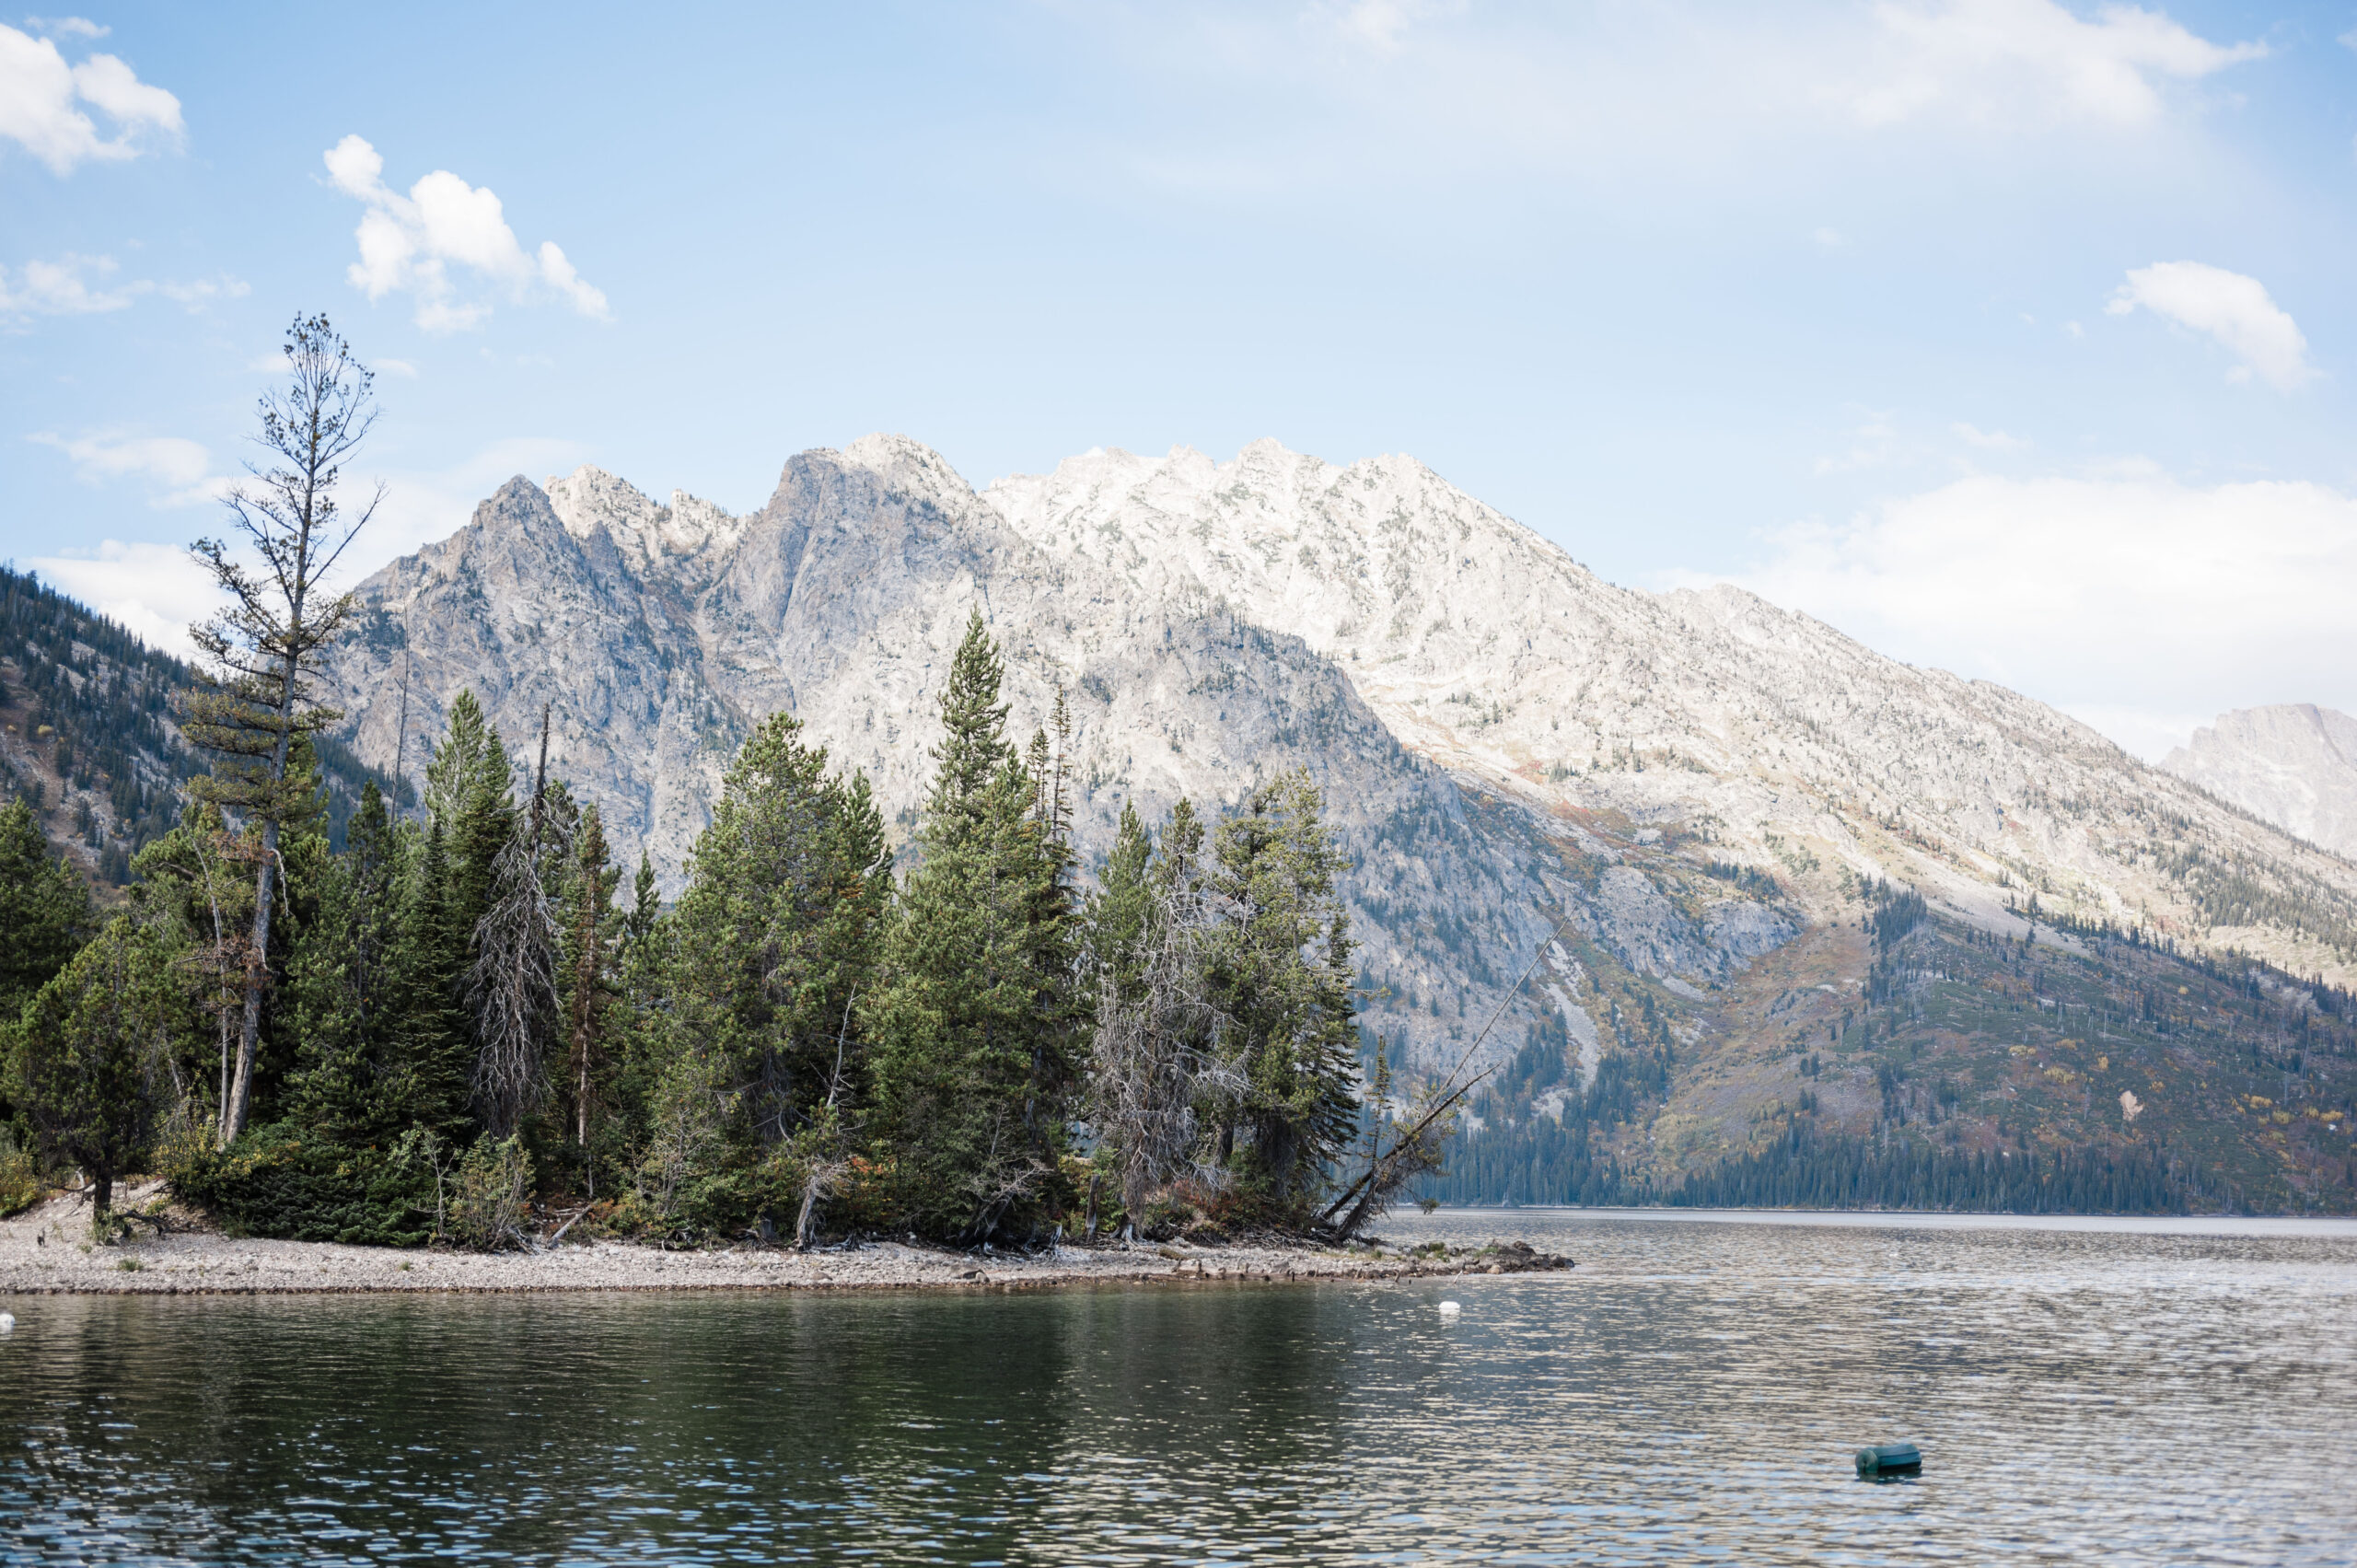 Jenny Lake and the Grand Teton mountain range